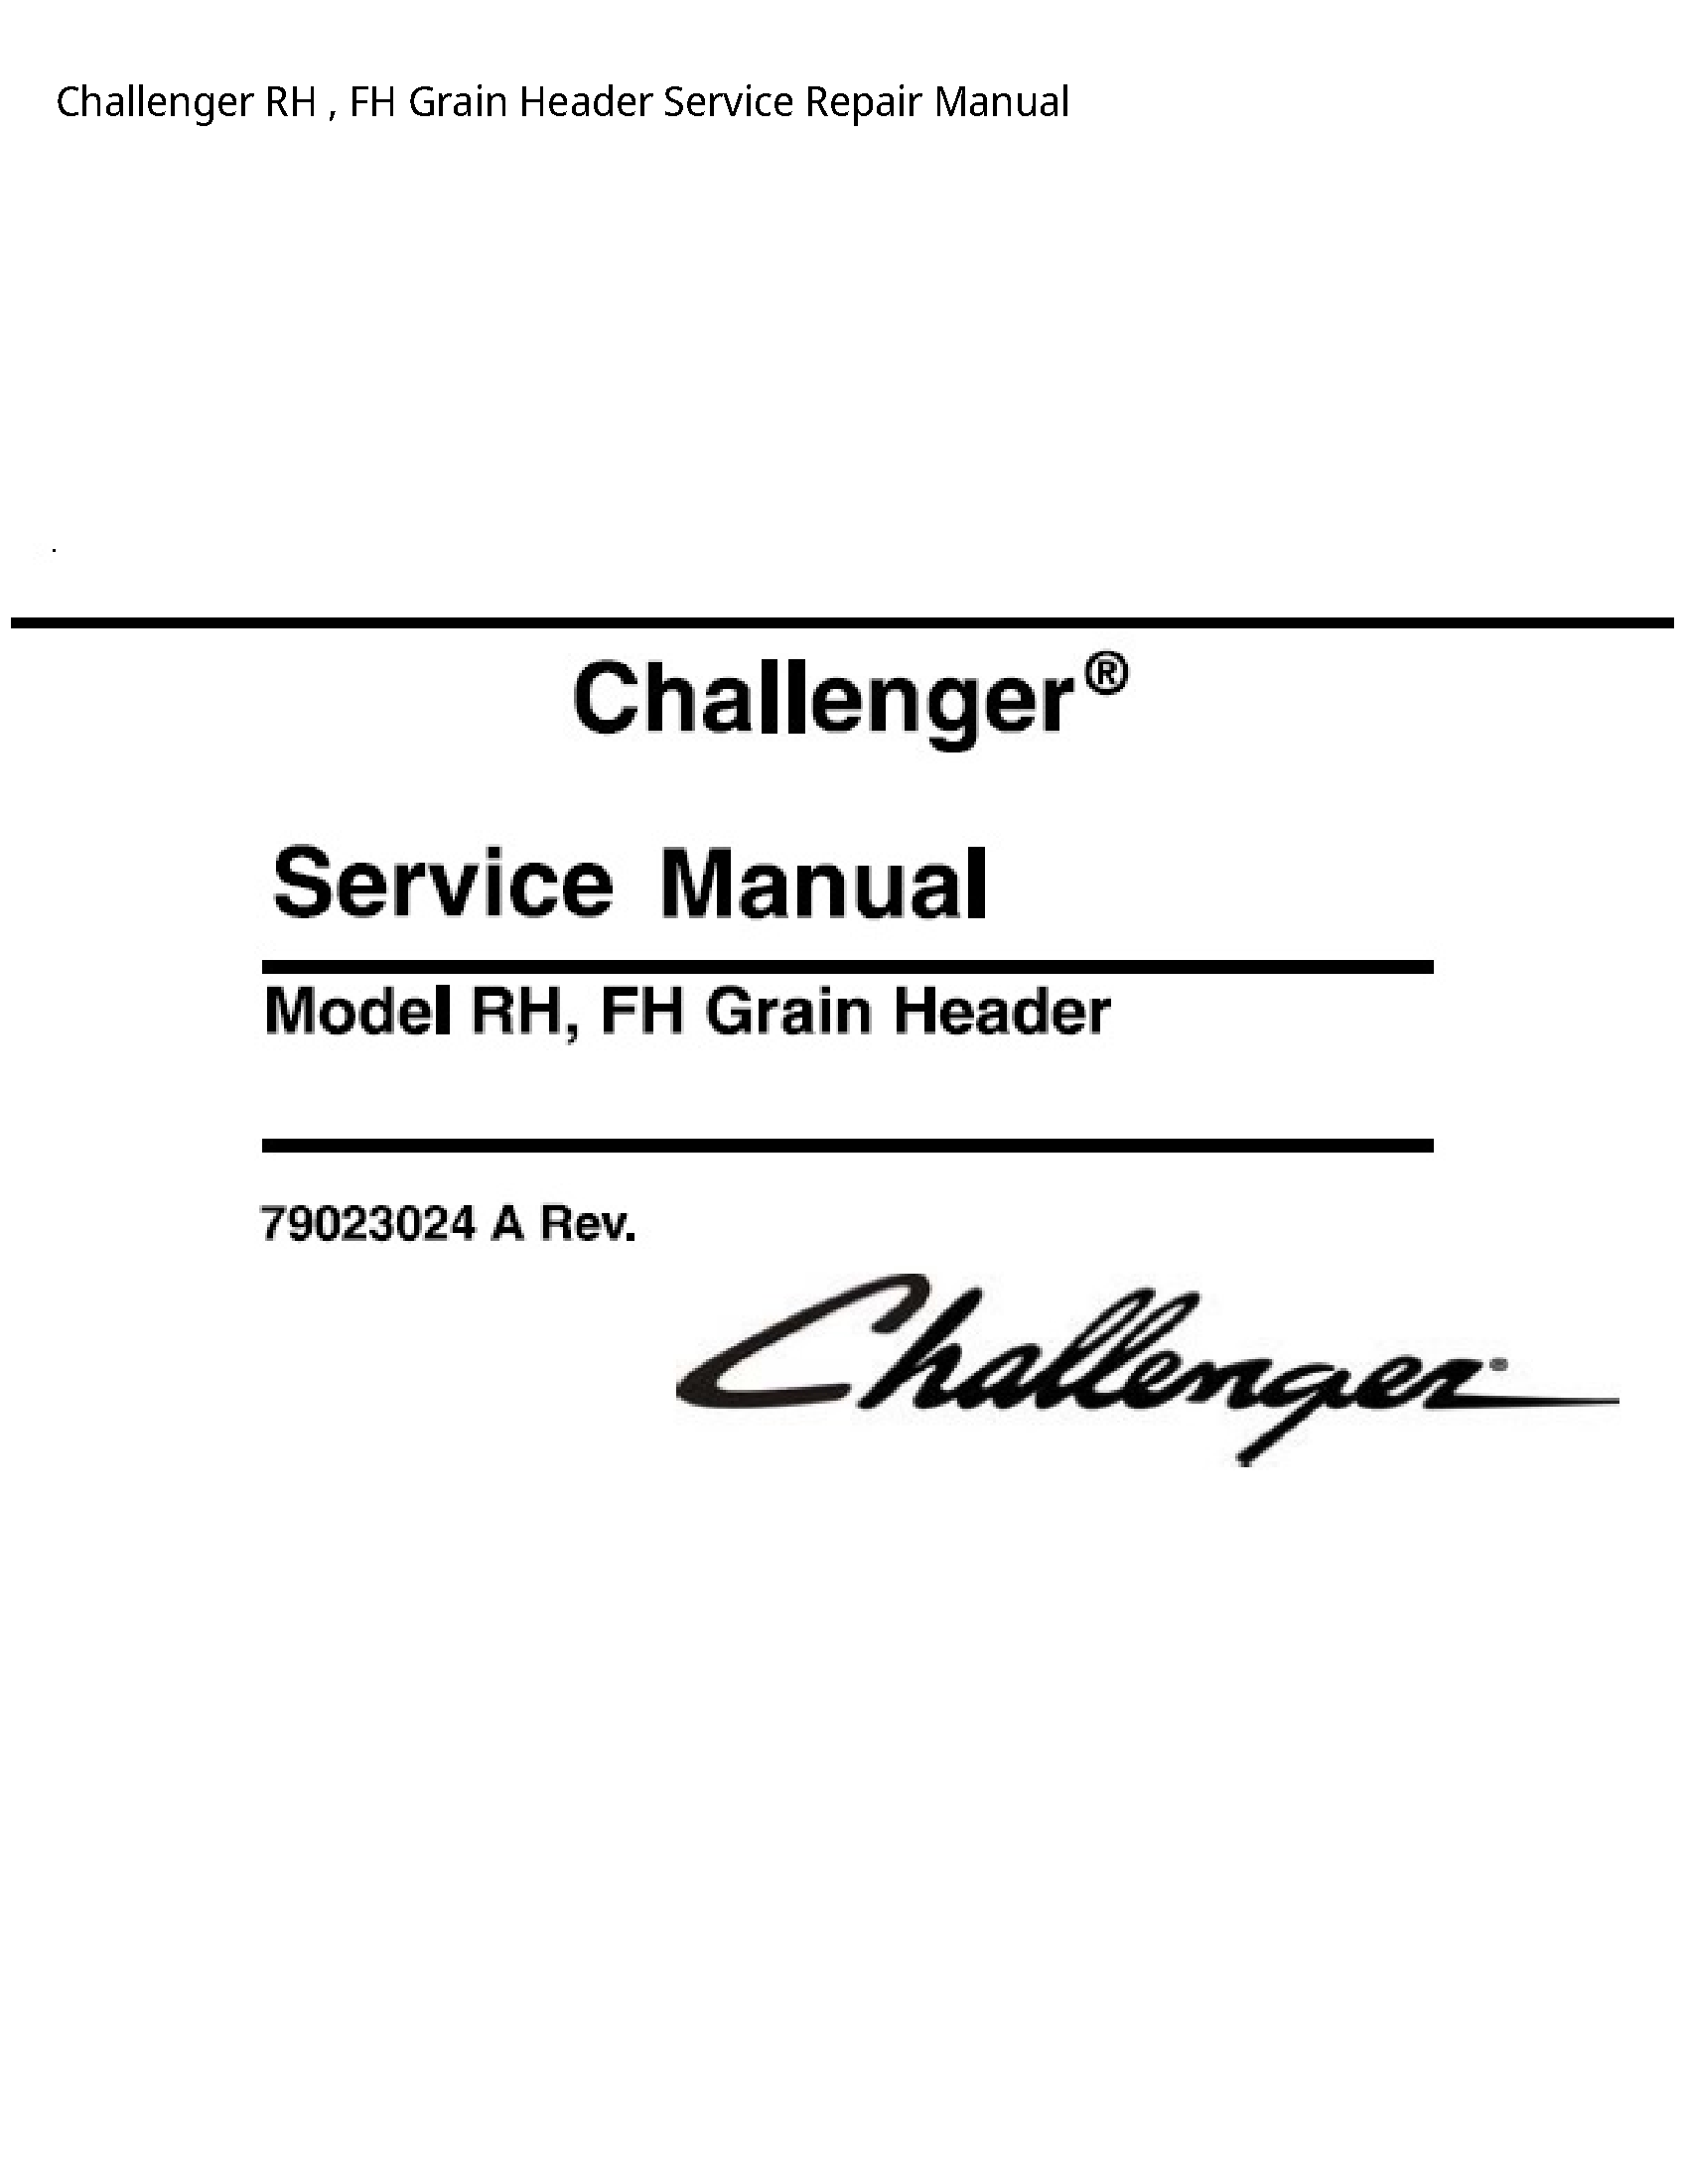 Challenger RH FH Grain Header manual